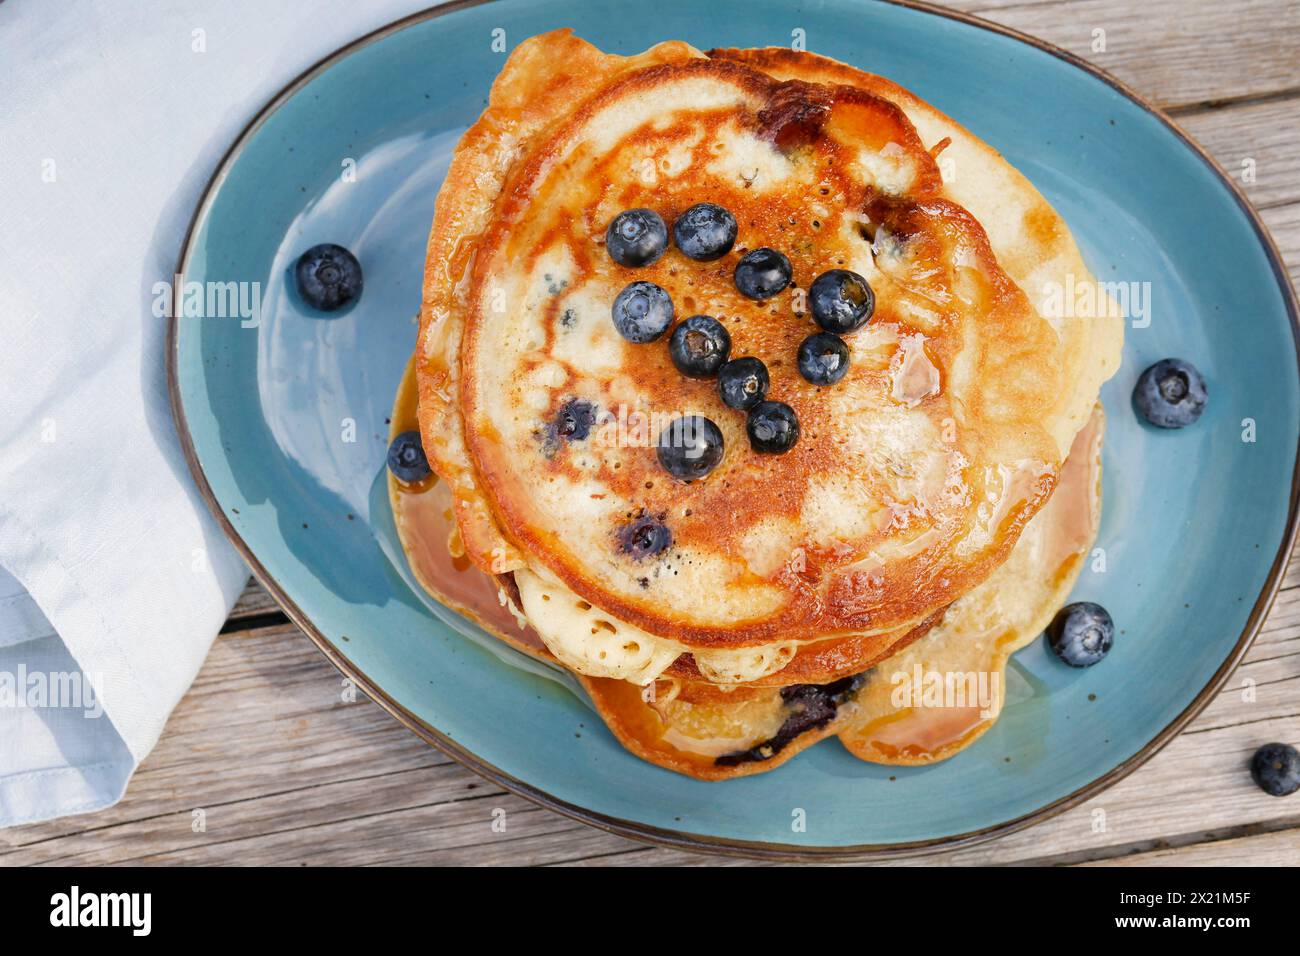 vegan making of Blueberry pancakes, step 5: Ready-made blueberry pancakes are served on a plate, series image 5/5 Stock Photo